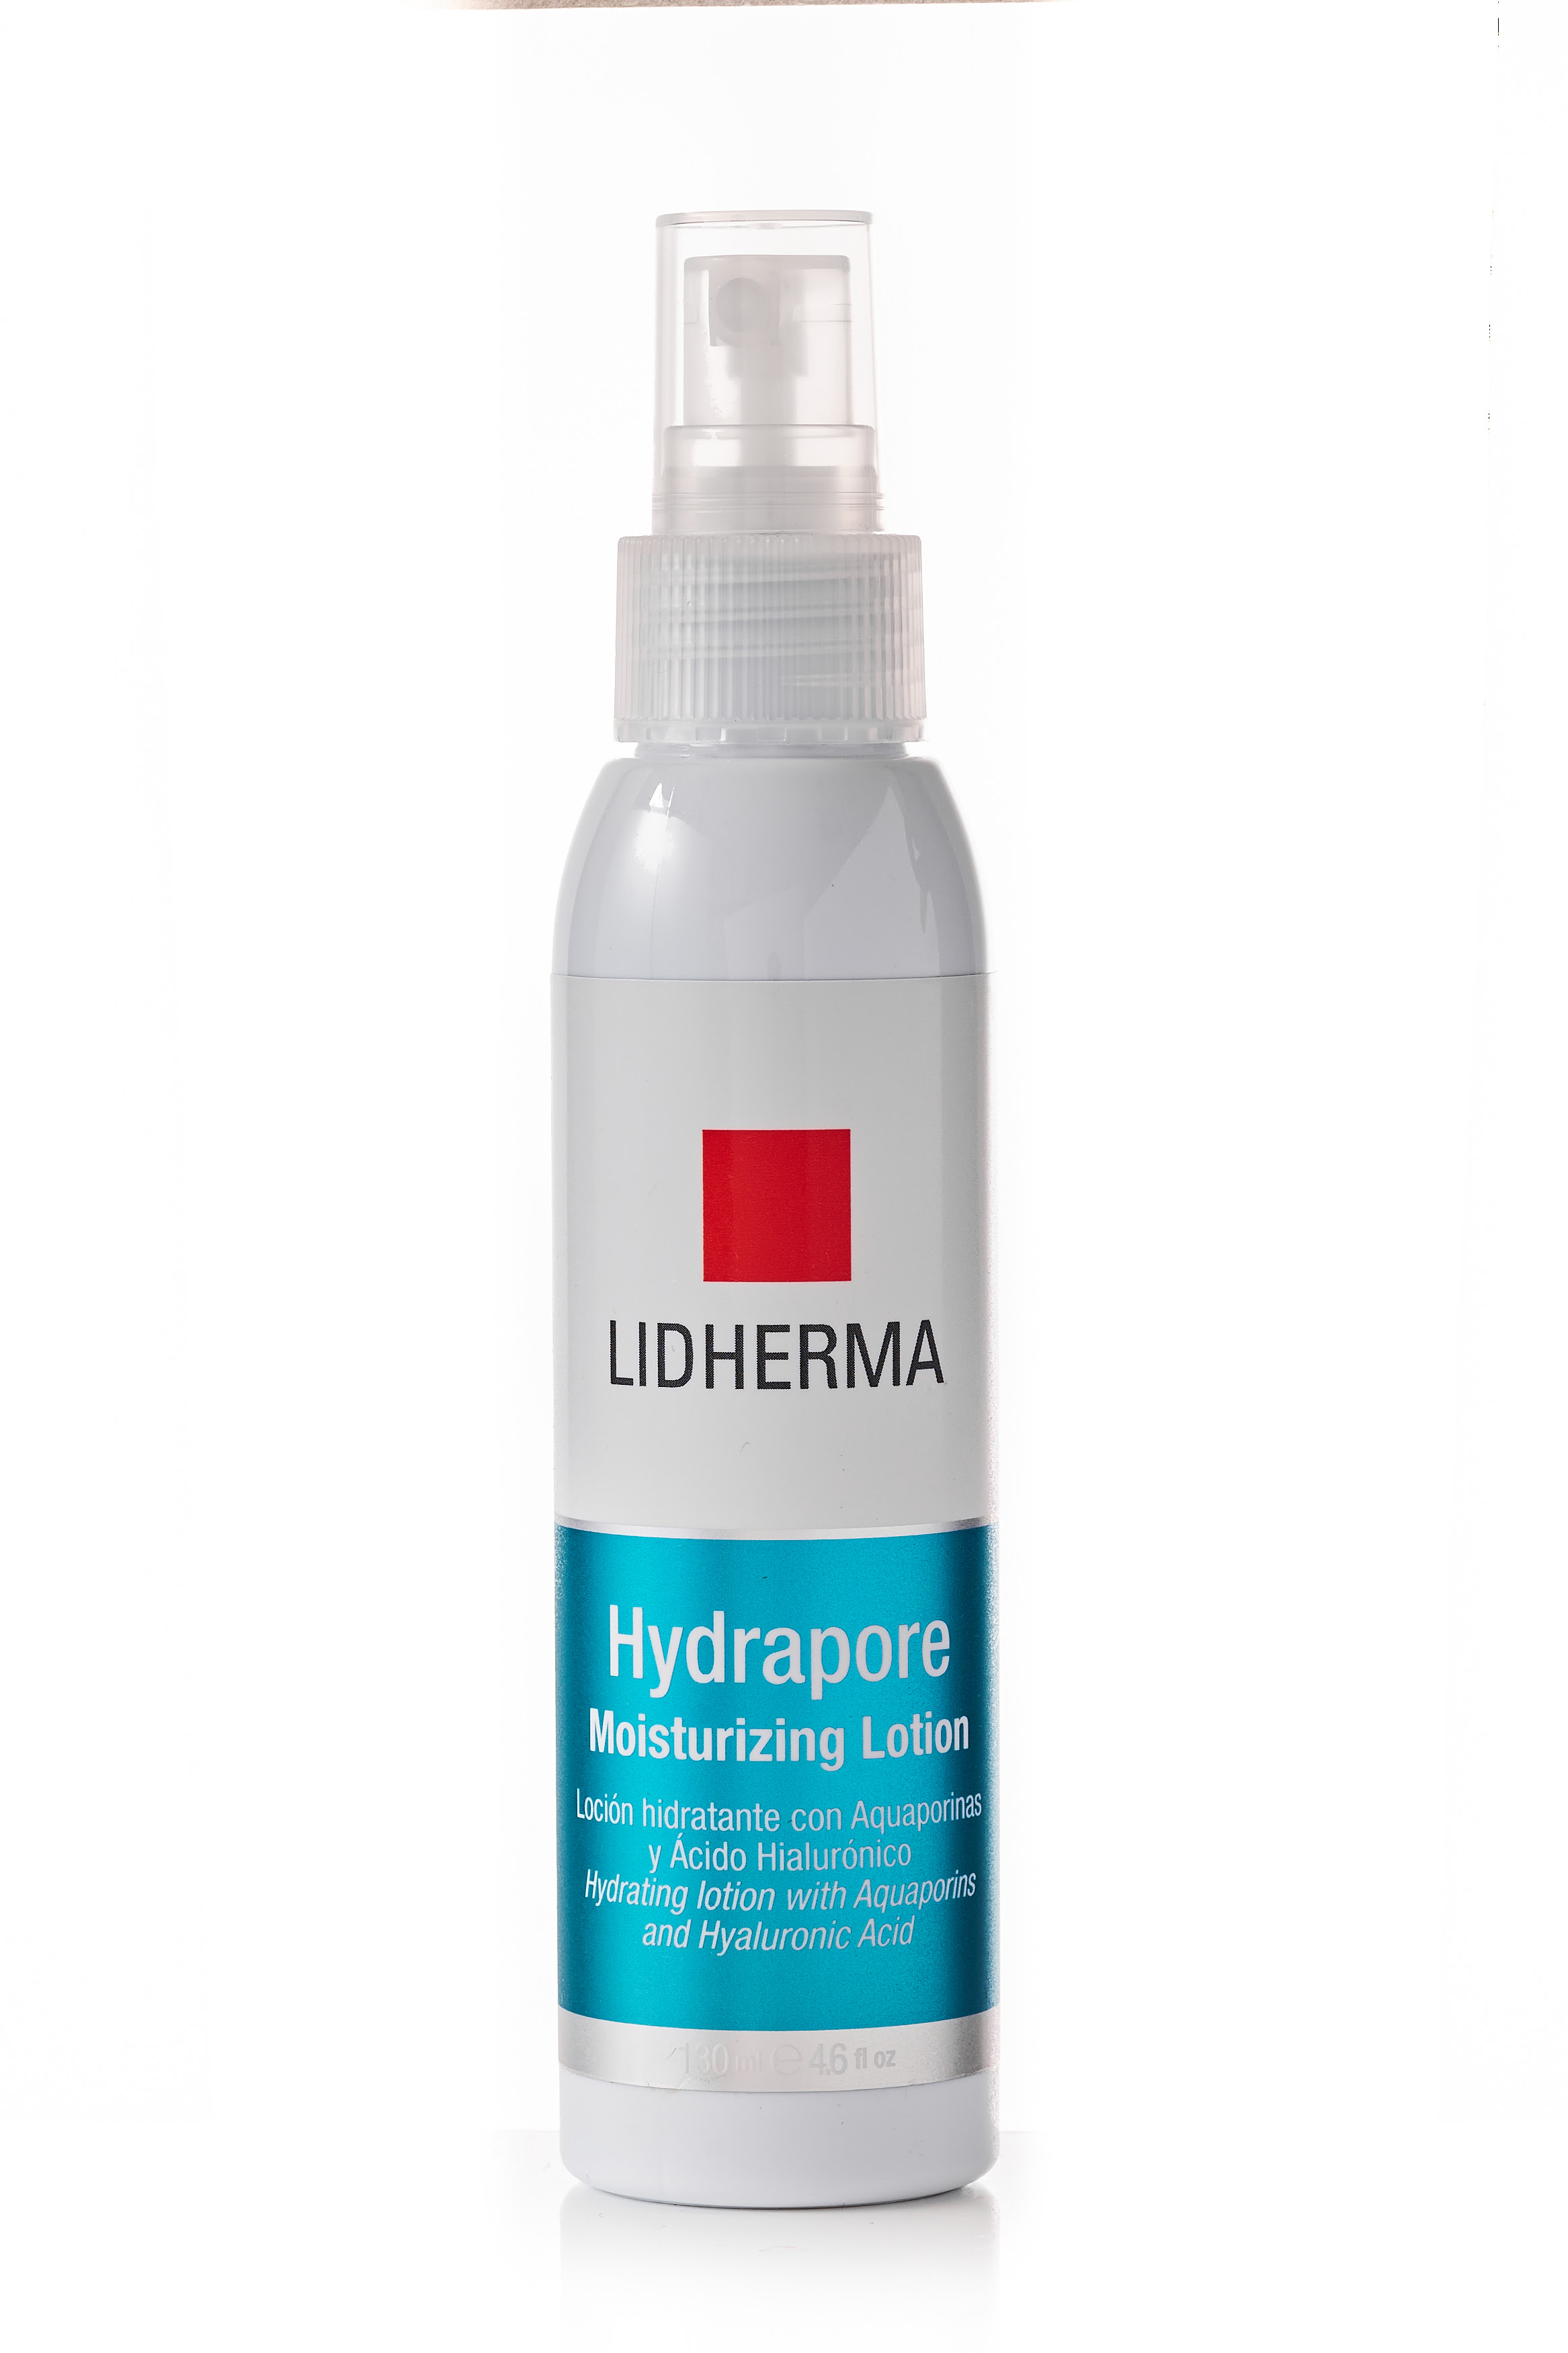 LIDHERMA_hydrapore_moisturizing_lotion_(1)